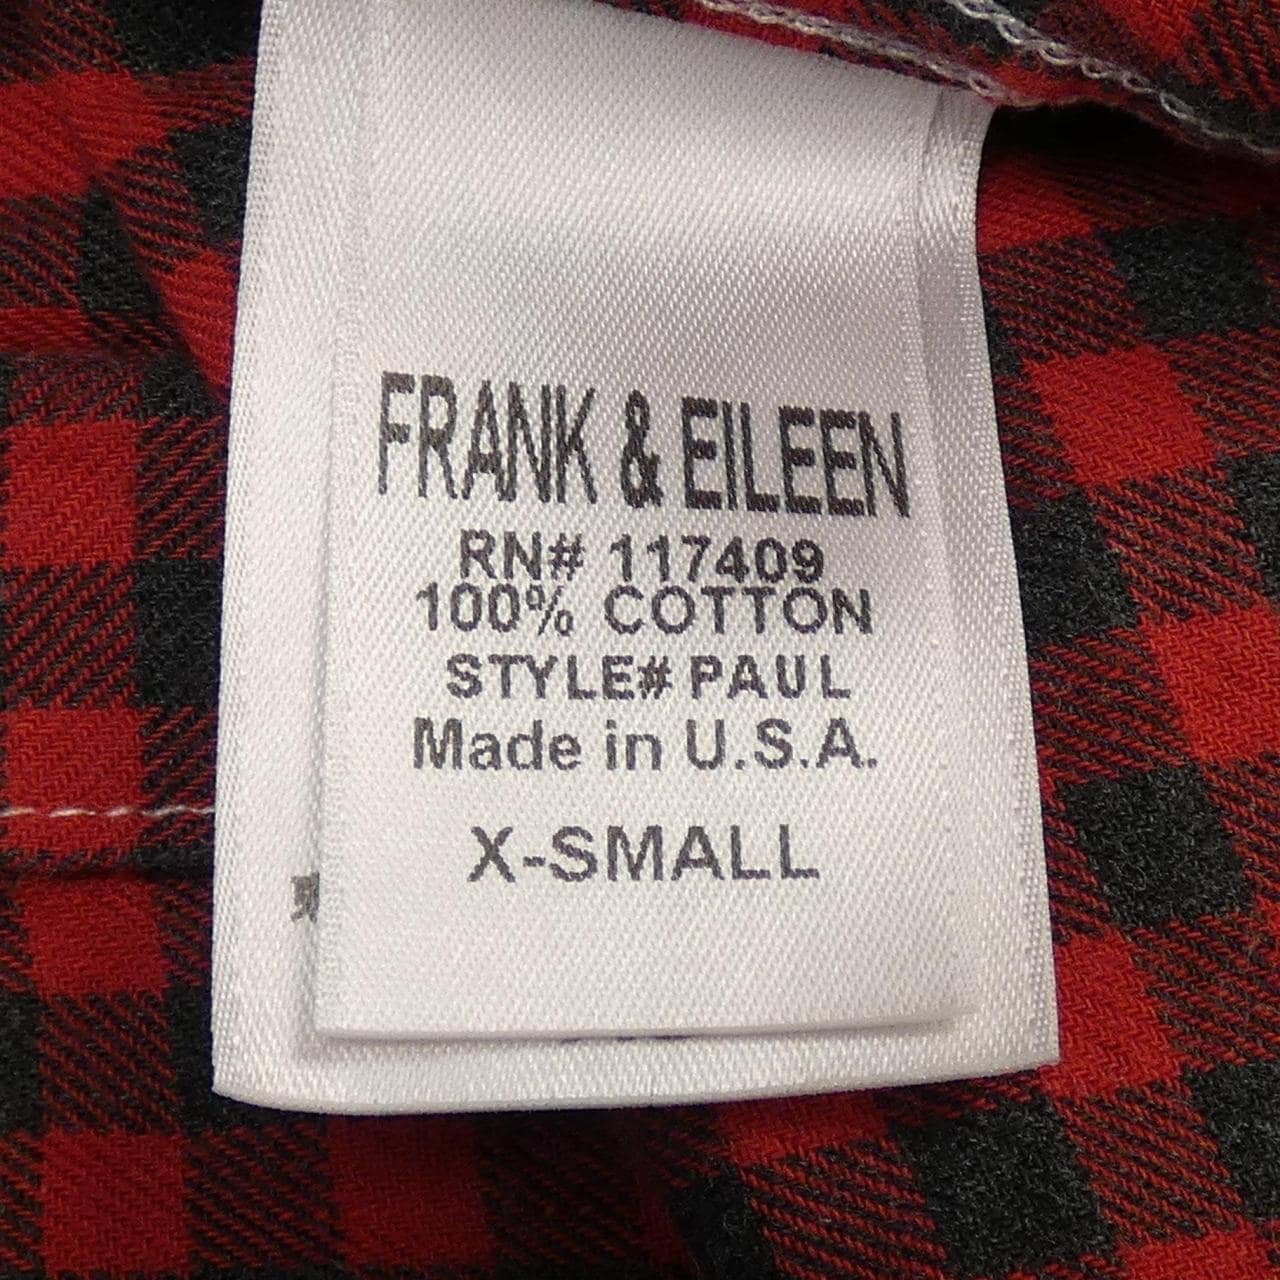 Frank and Irene FRANK&EILEEN shirt